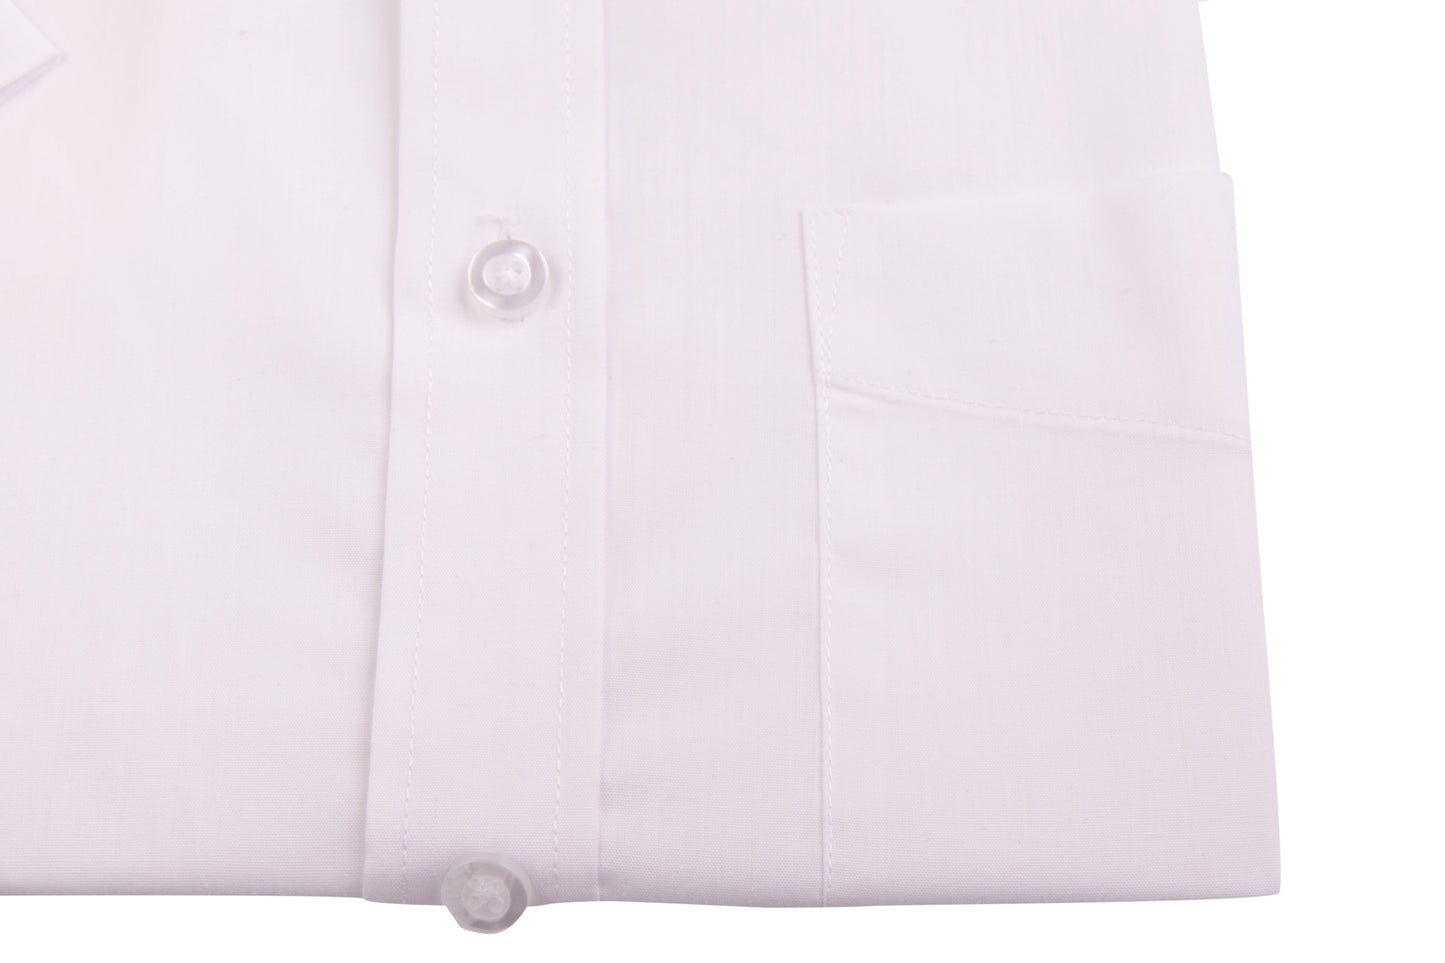 White Short Sleeve Shirt with Regular Collar - Brand New